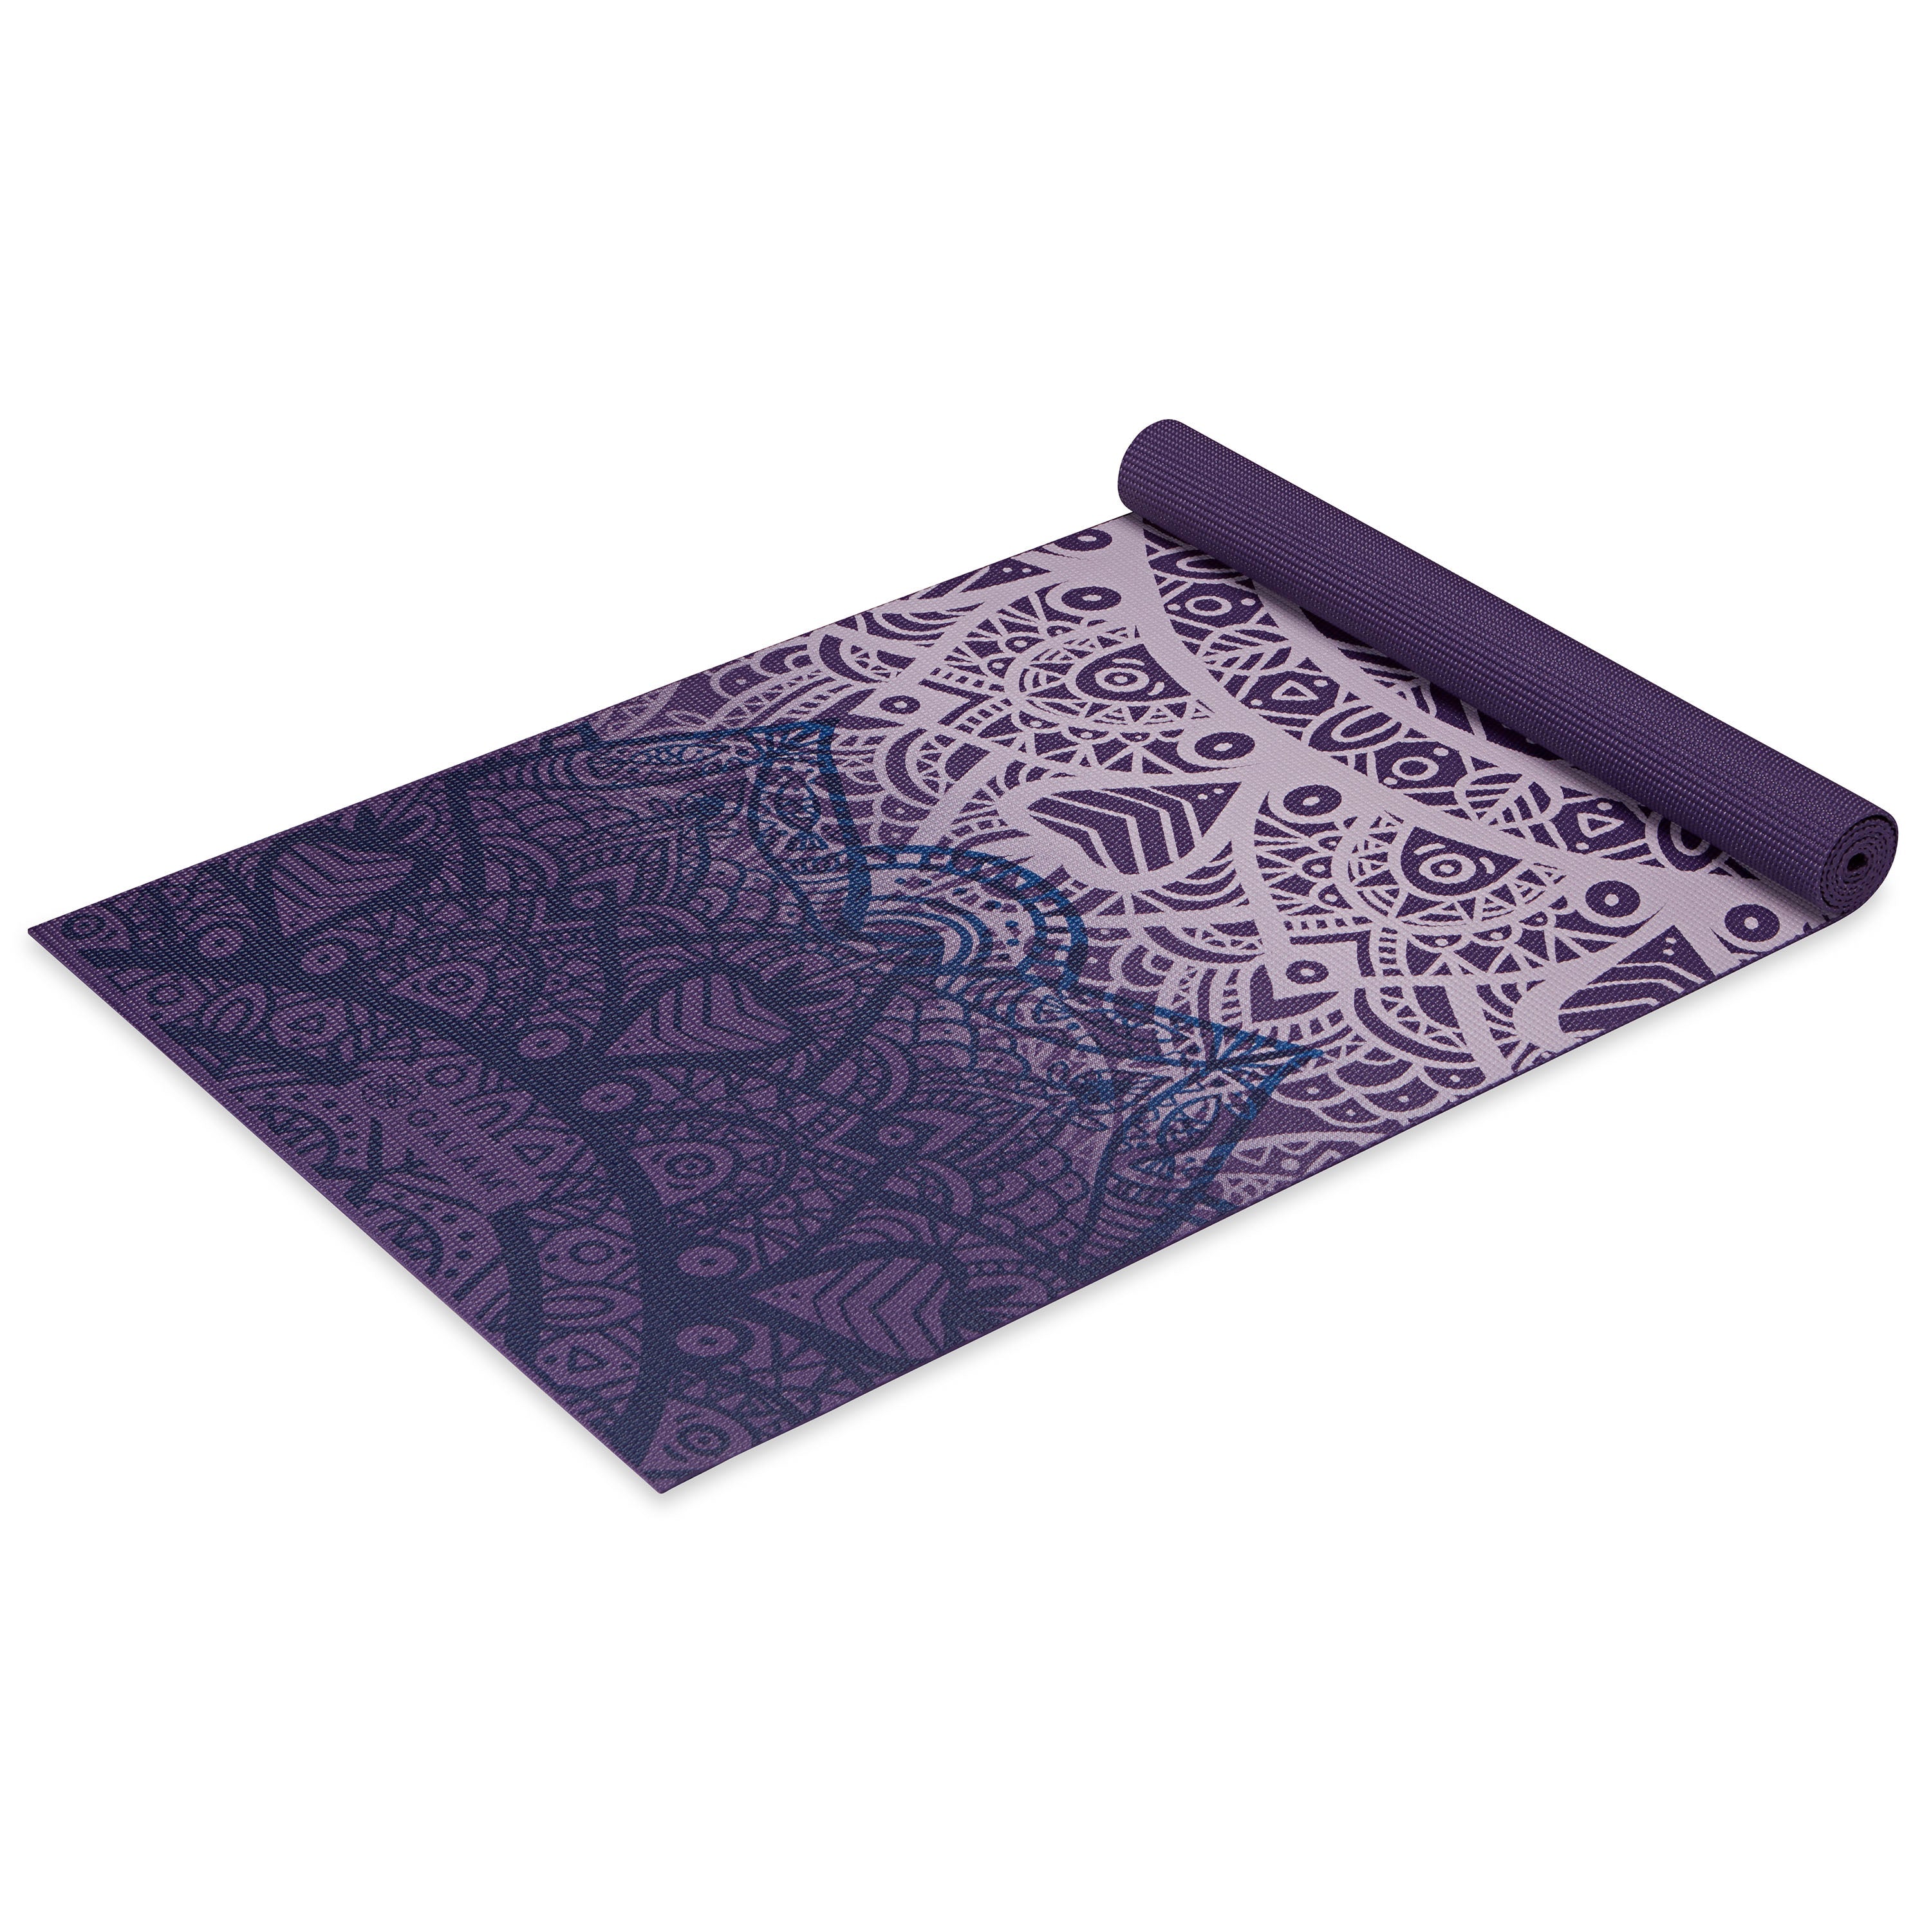 Classic Yoga Mat (4mm) - Purple Lattice